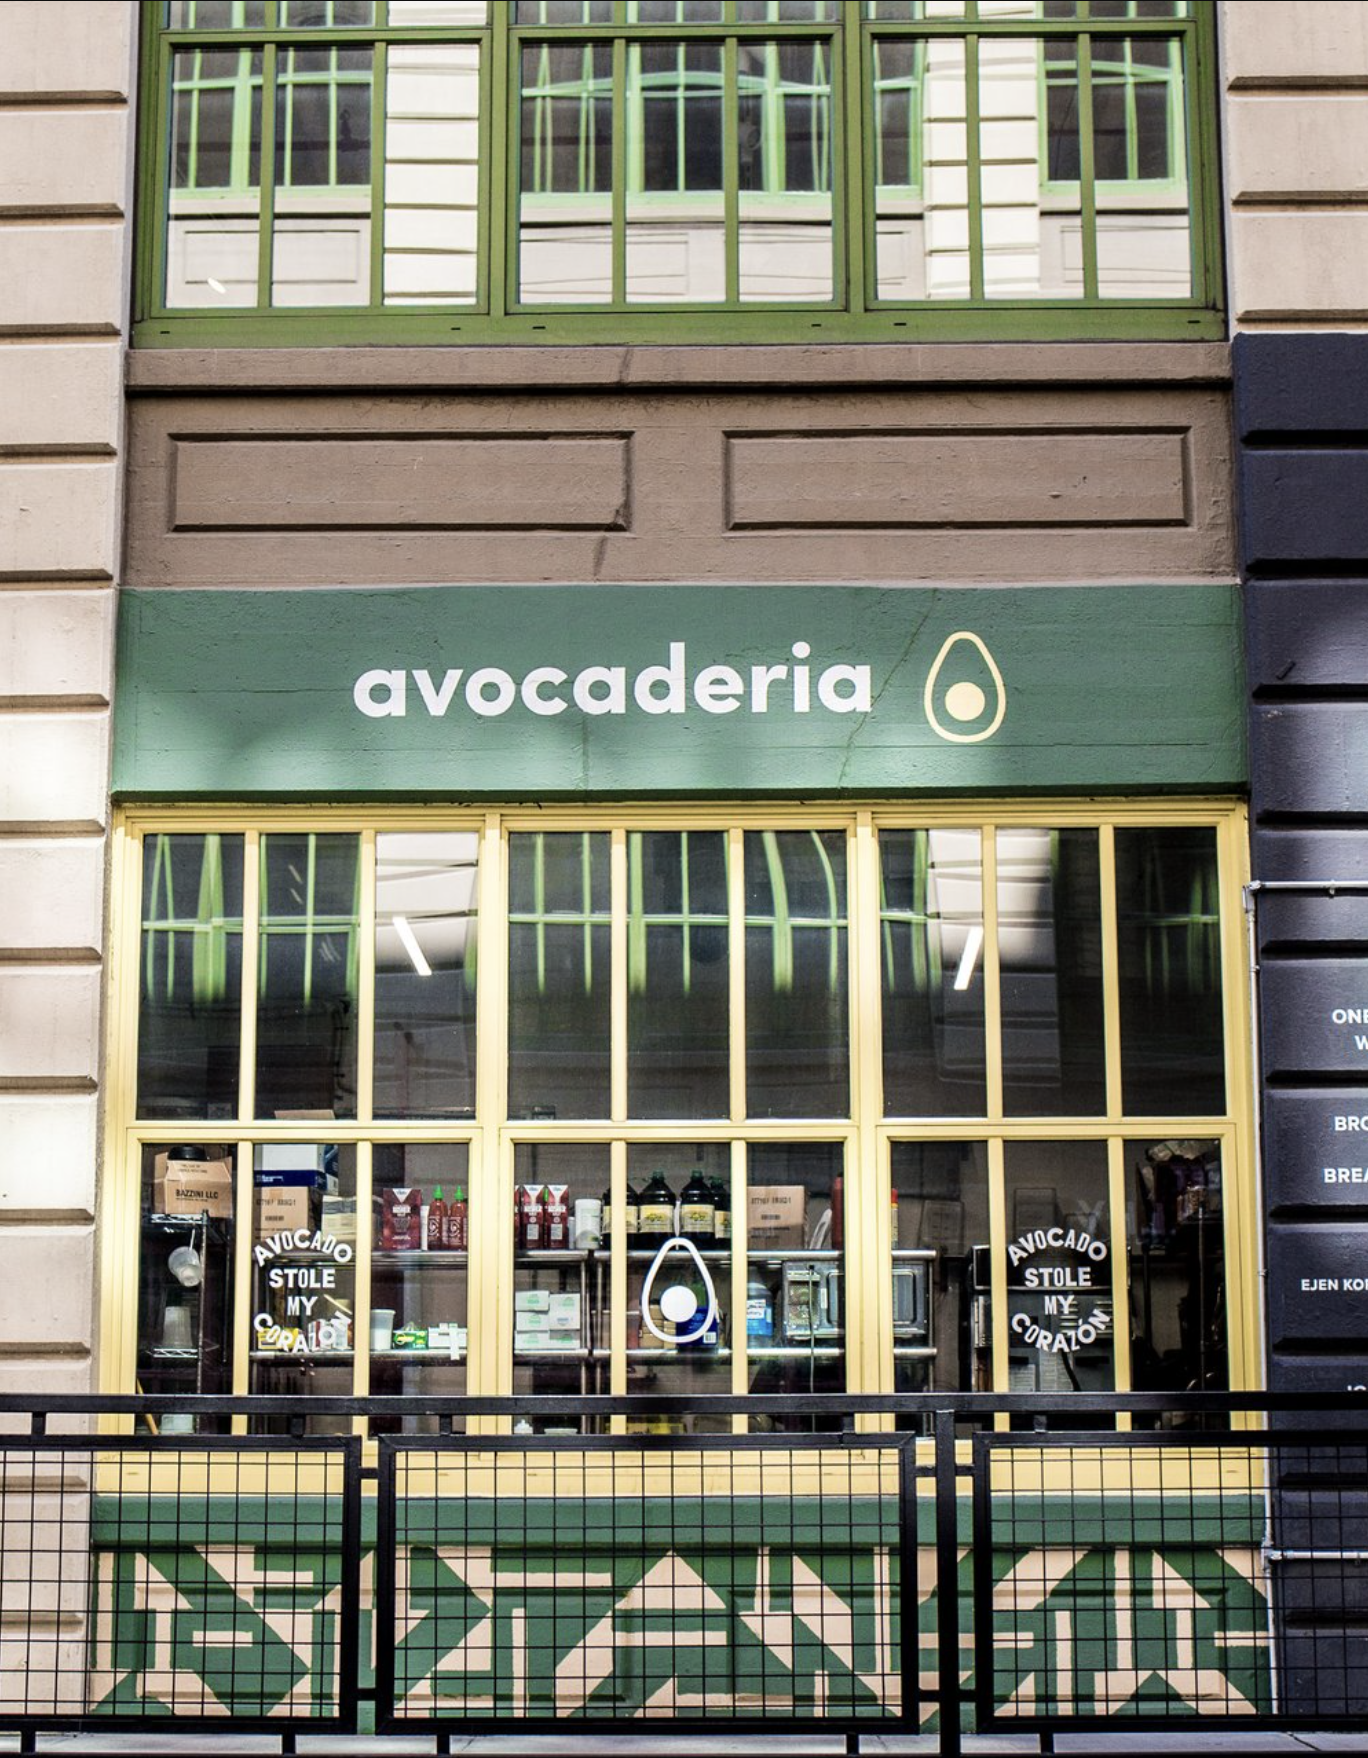 The exterior of "avocaderia."